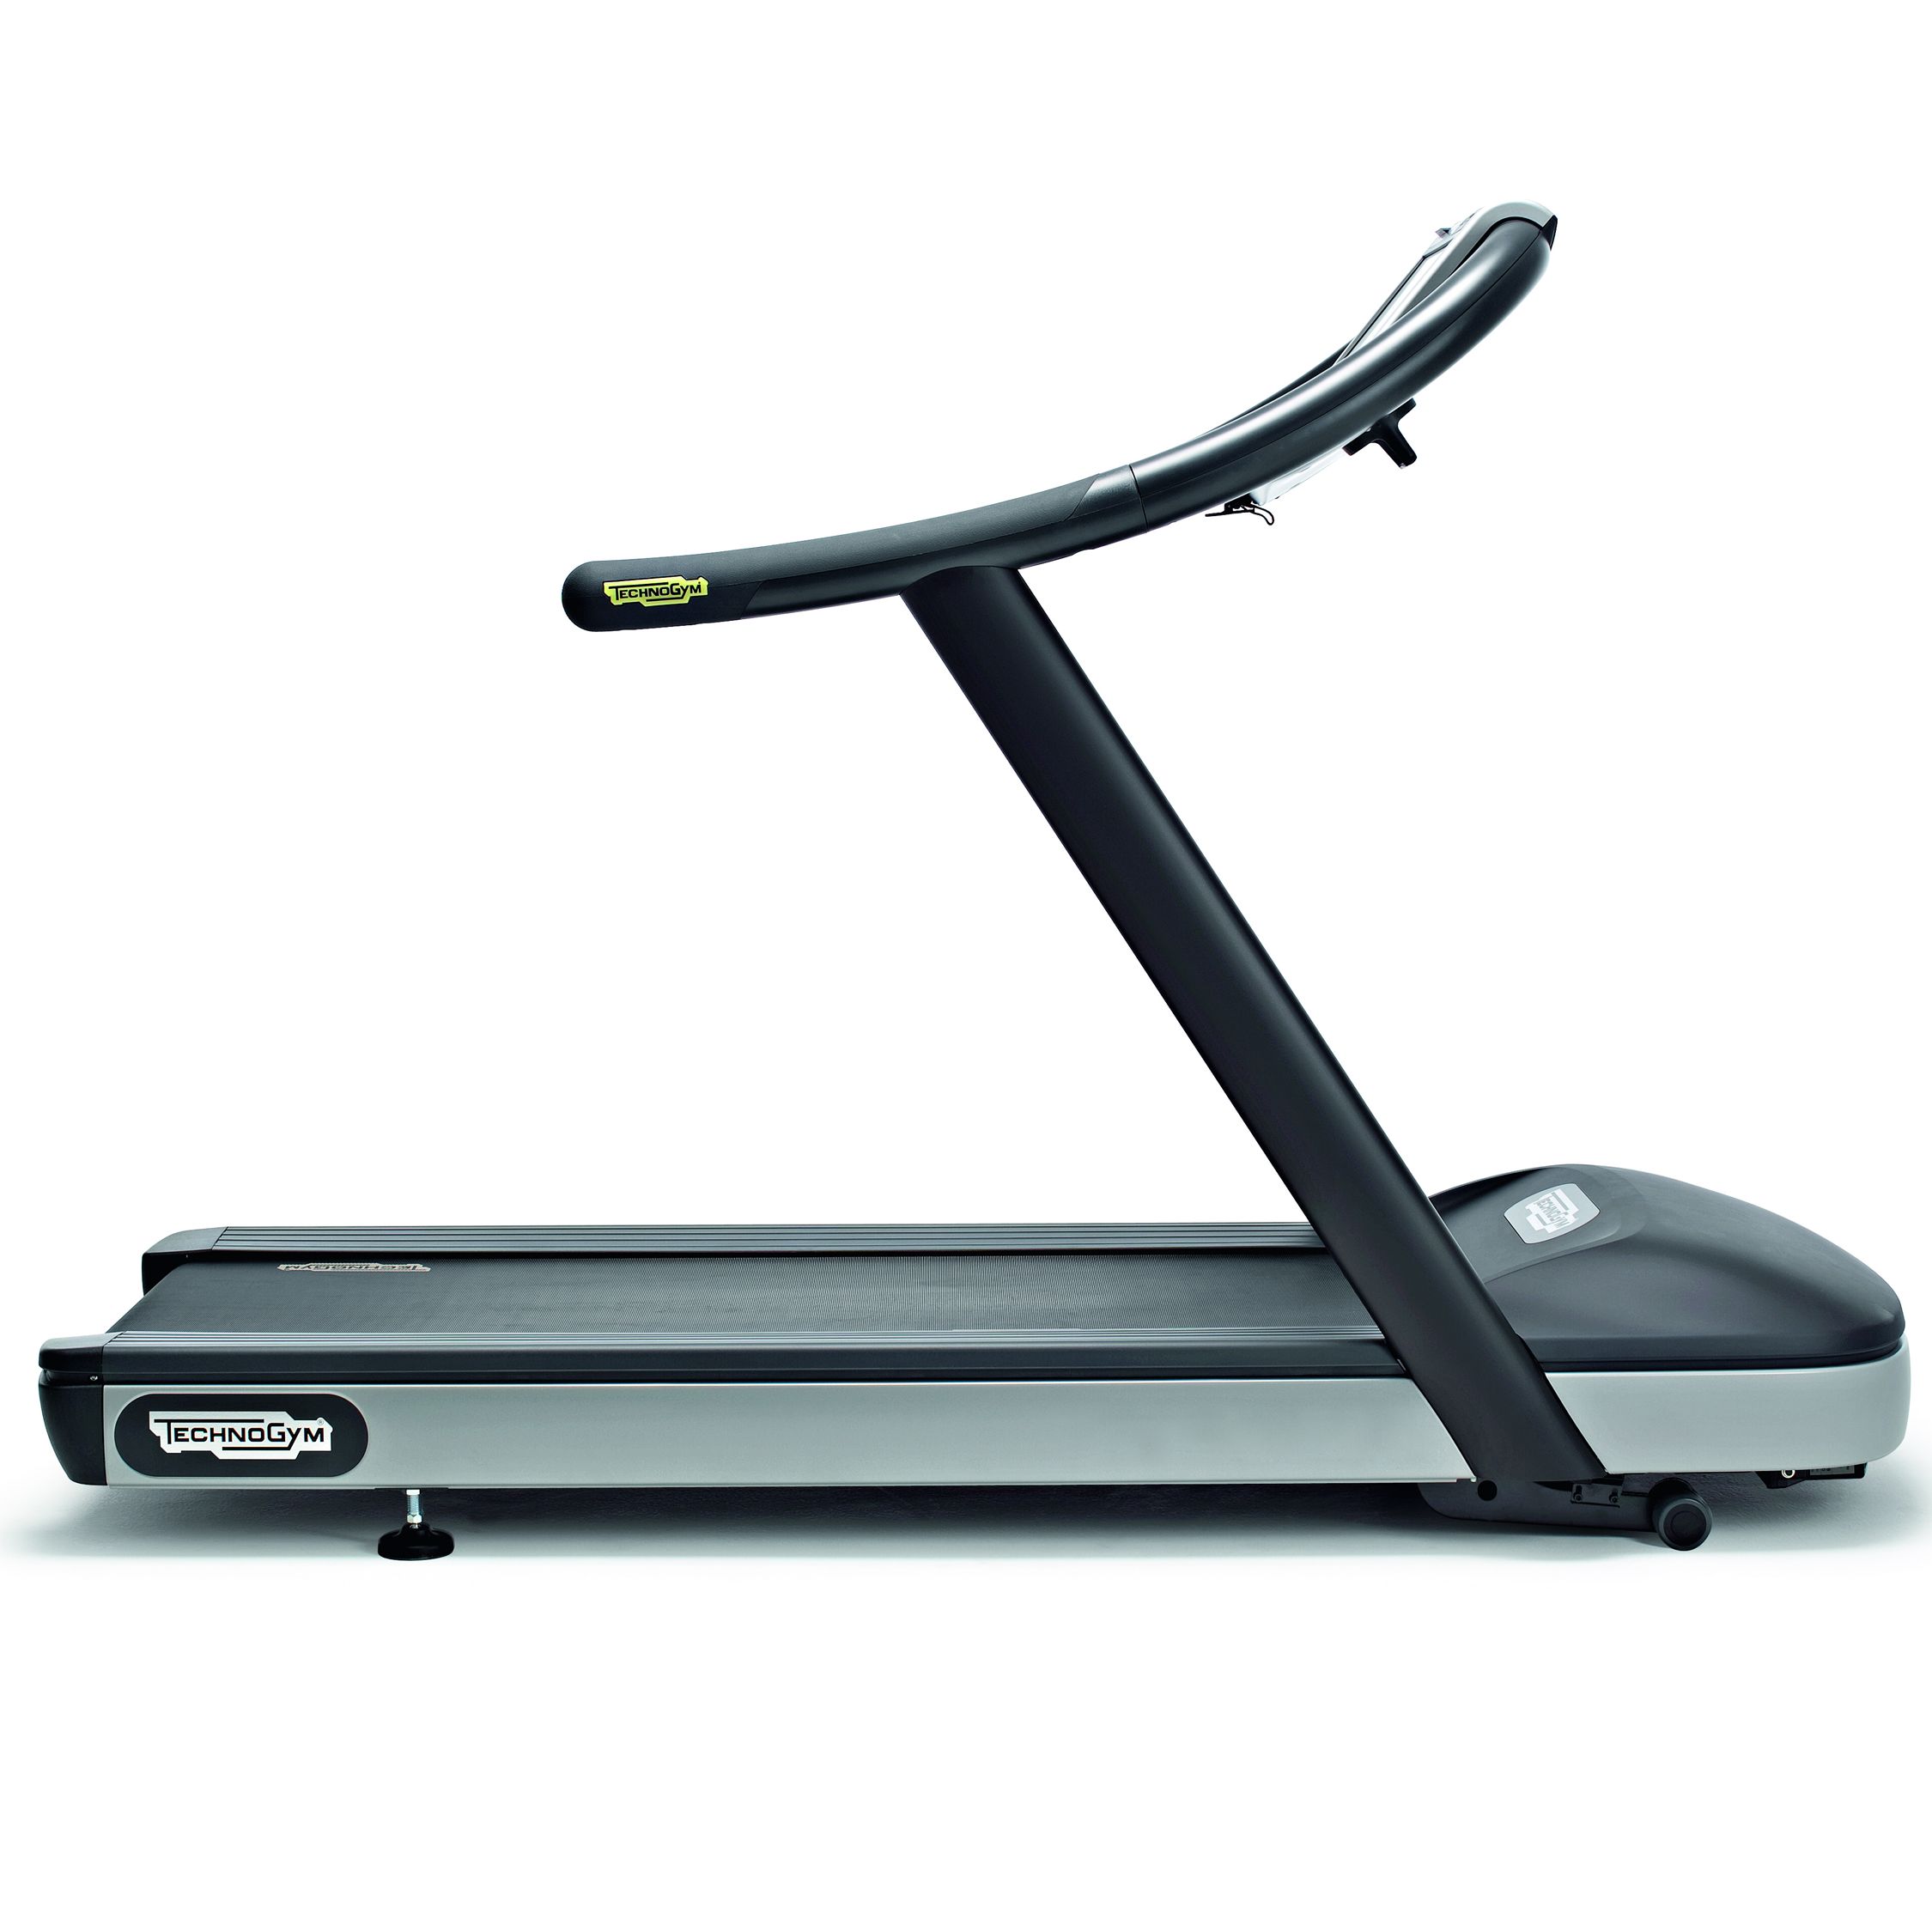 Jog Now 700 Visioweb Treadmill